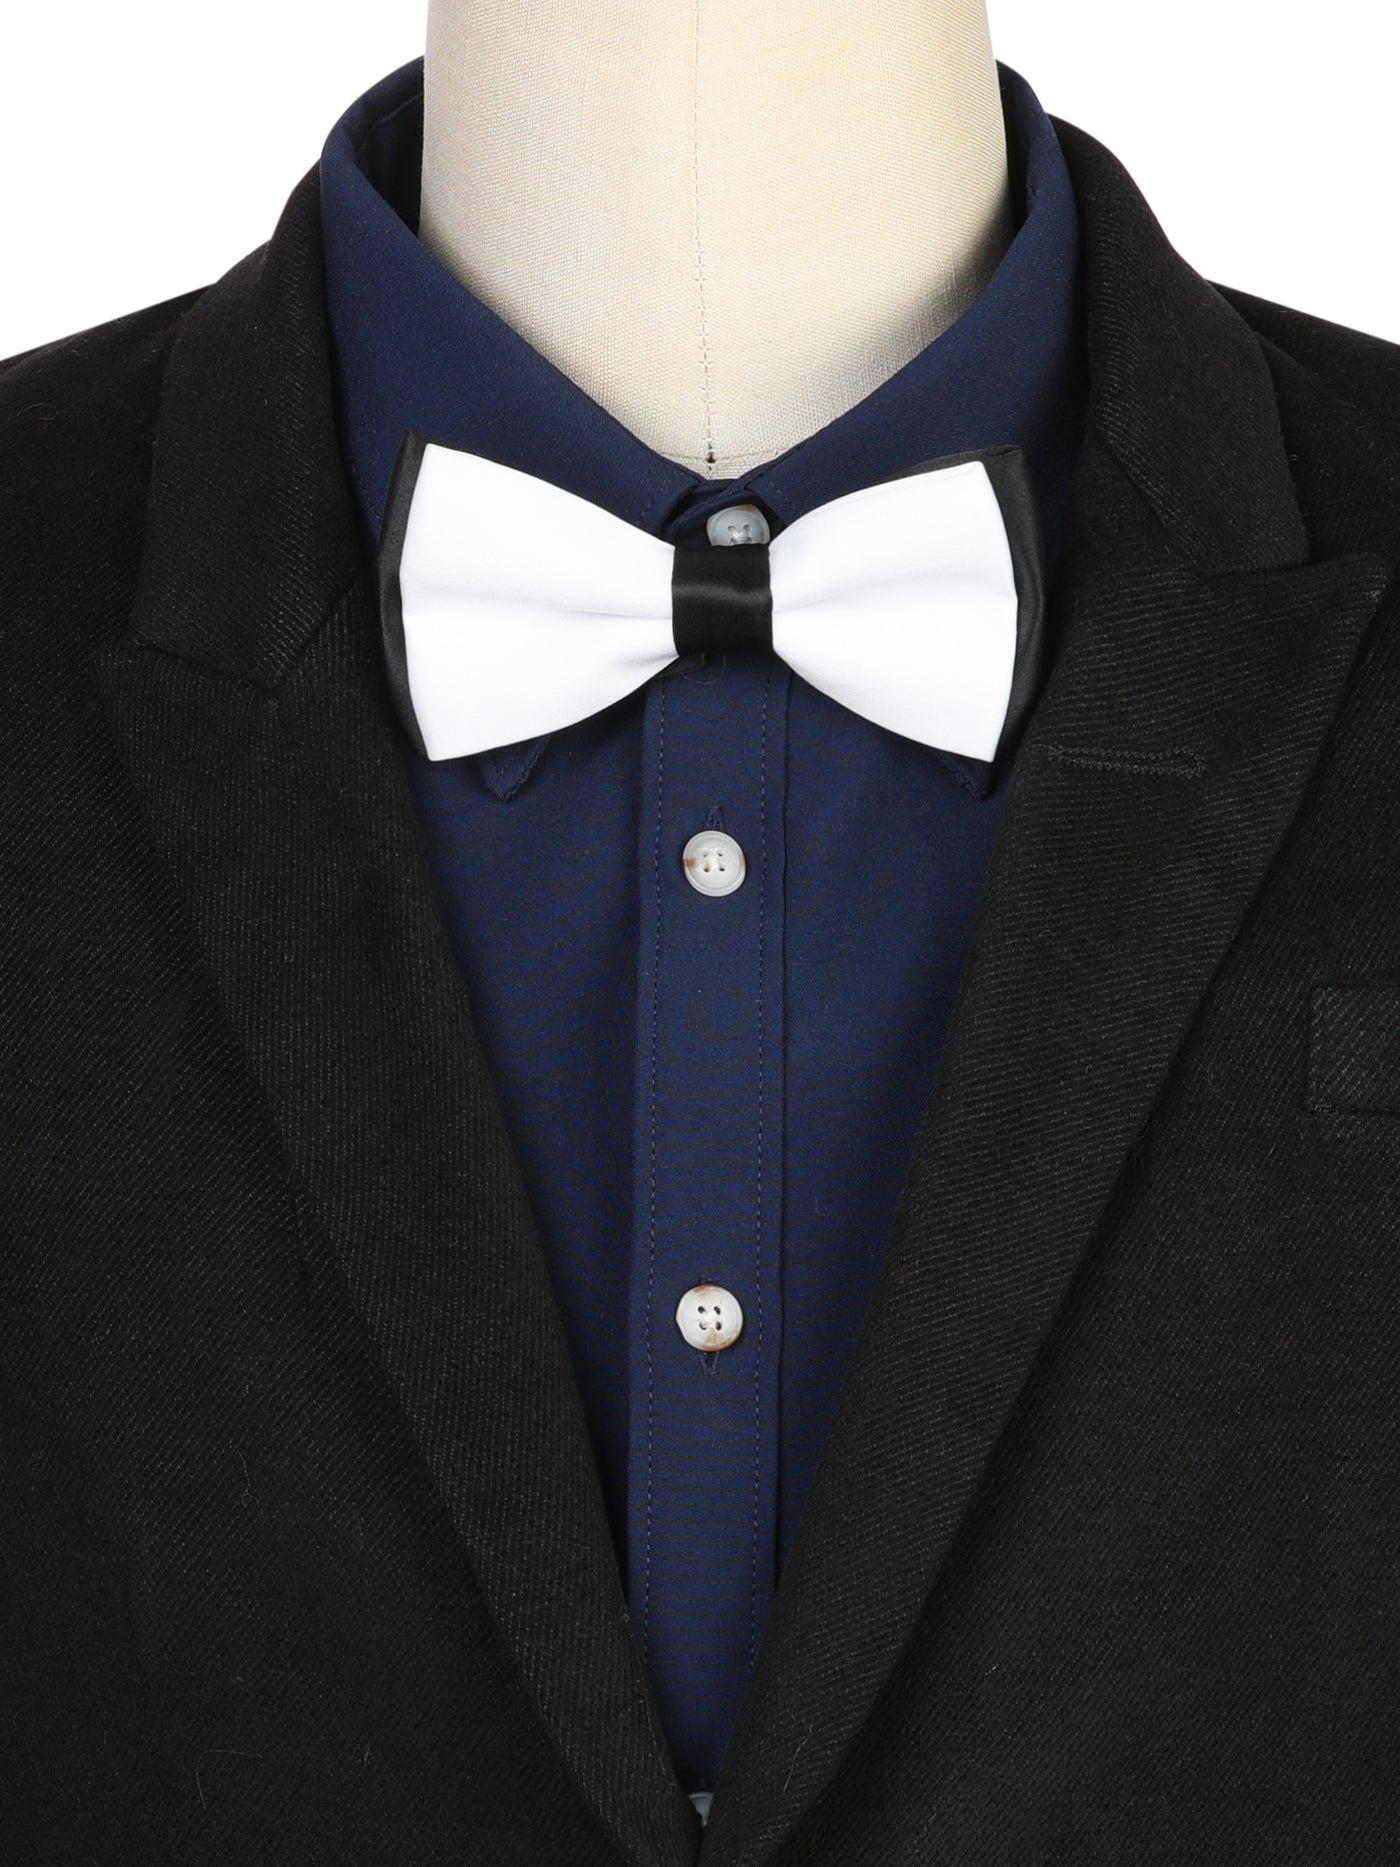 Bublédon Men's Contarst Color Pre-tied Bow Ties Tuxedo Business Formal Adjustable Block Bowtie